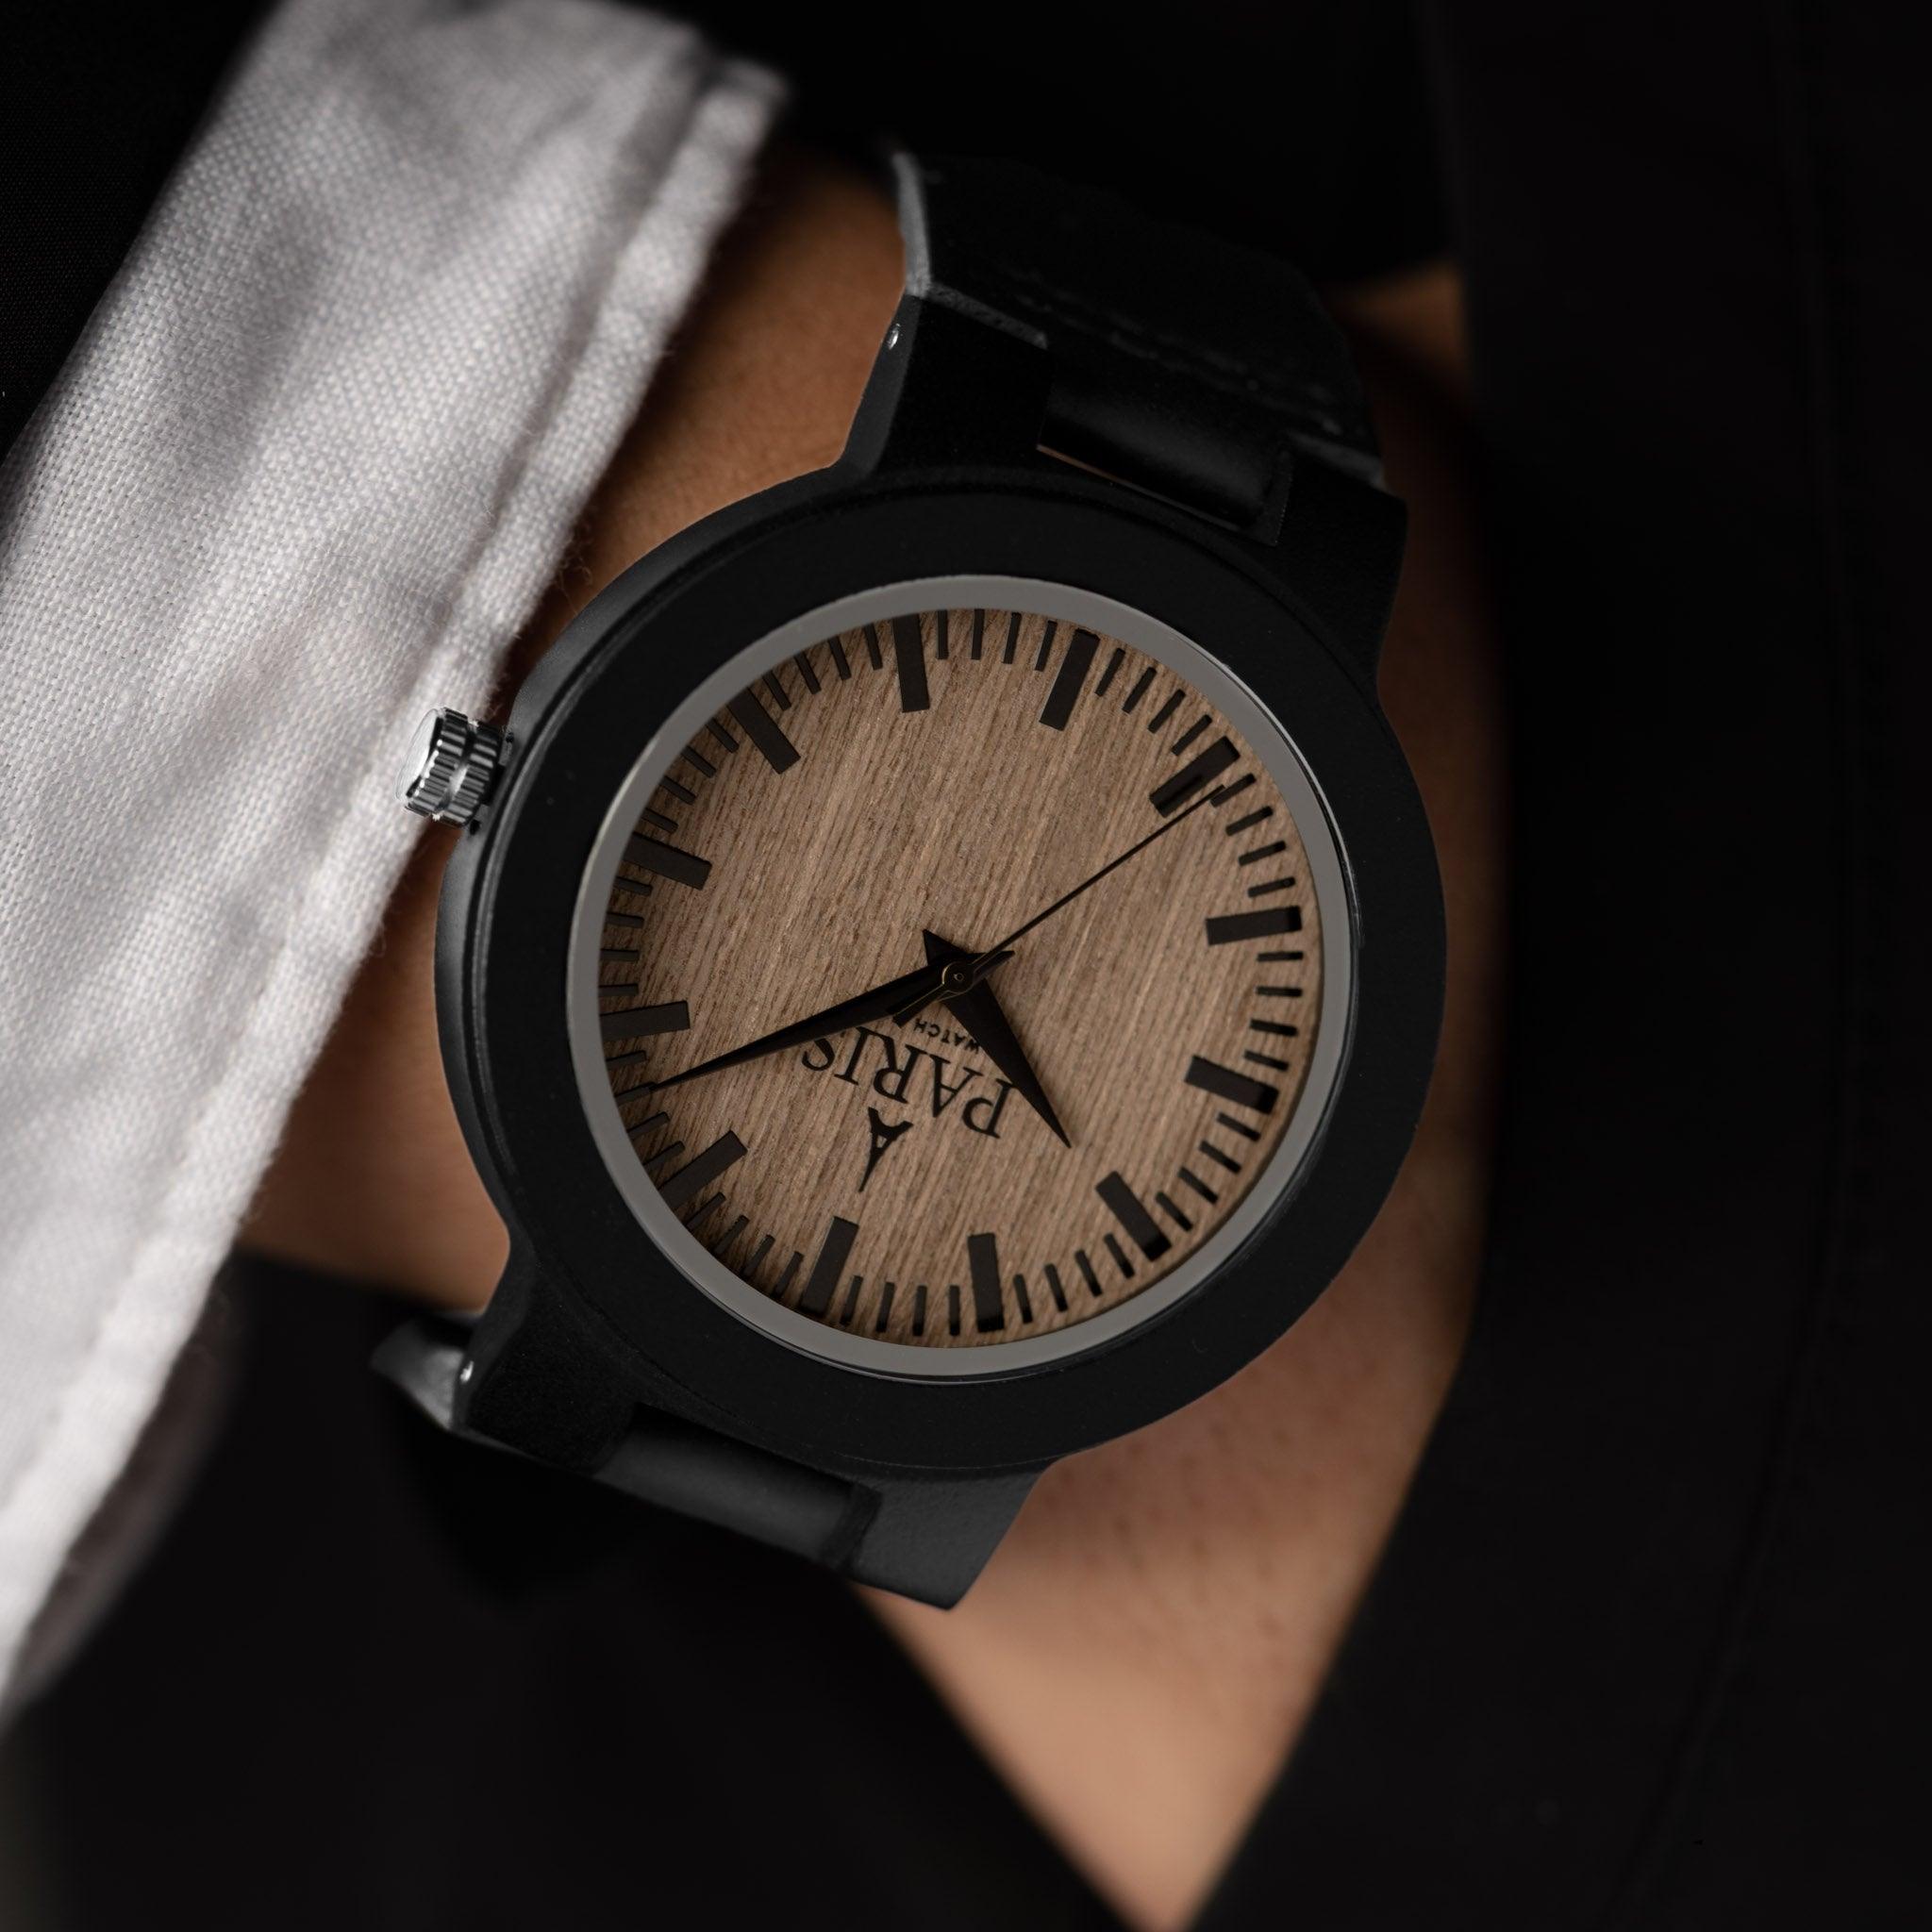 Executive - Almond - Paris Watch Company